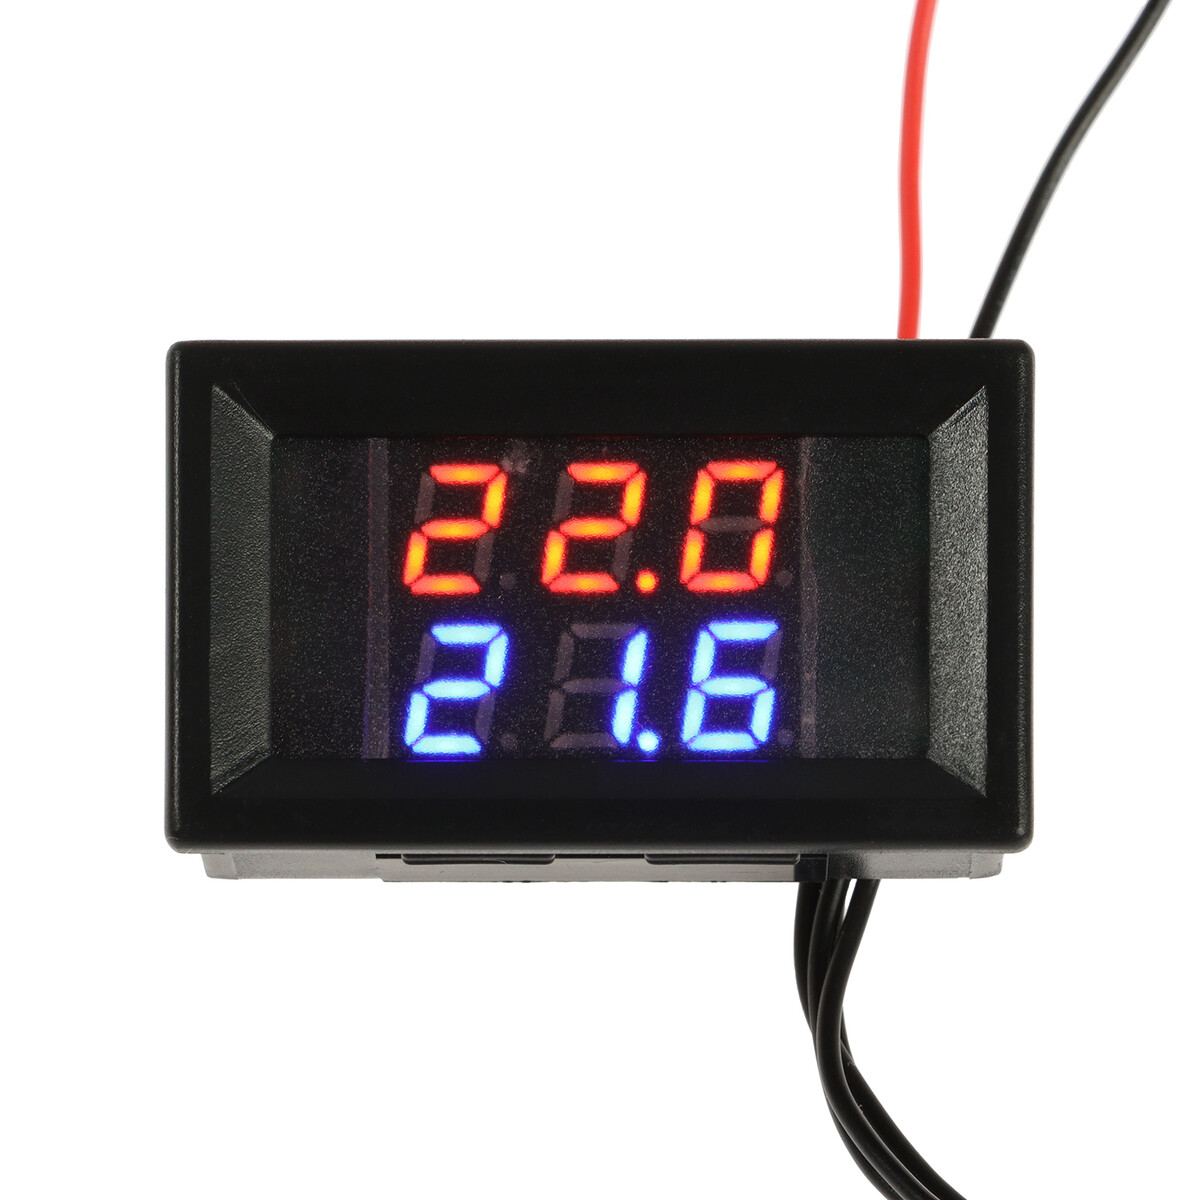 Термометр цифровой, жк-экран, провод 1.5 м, 45×26 мм, -20-100 °c rst цифровой оконный термометр на липучке rst01077